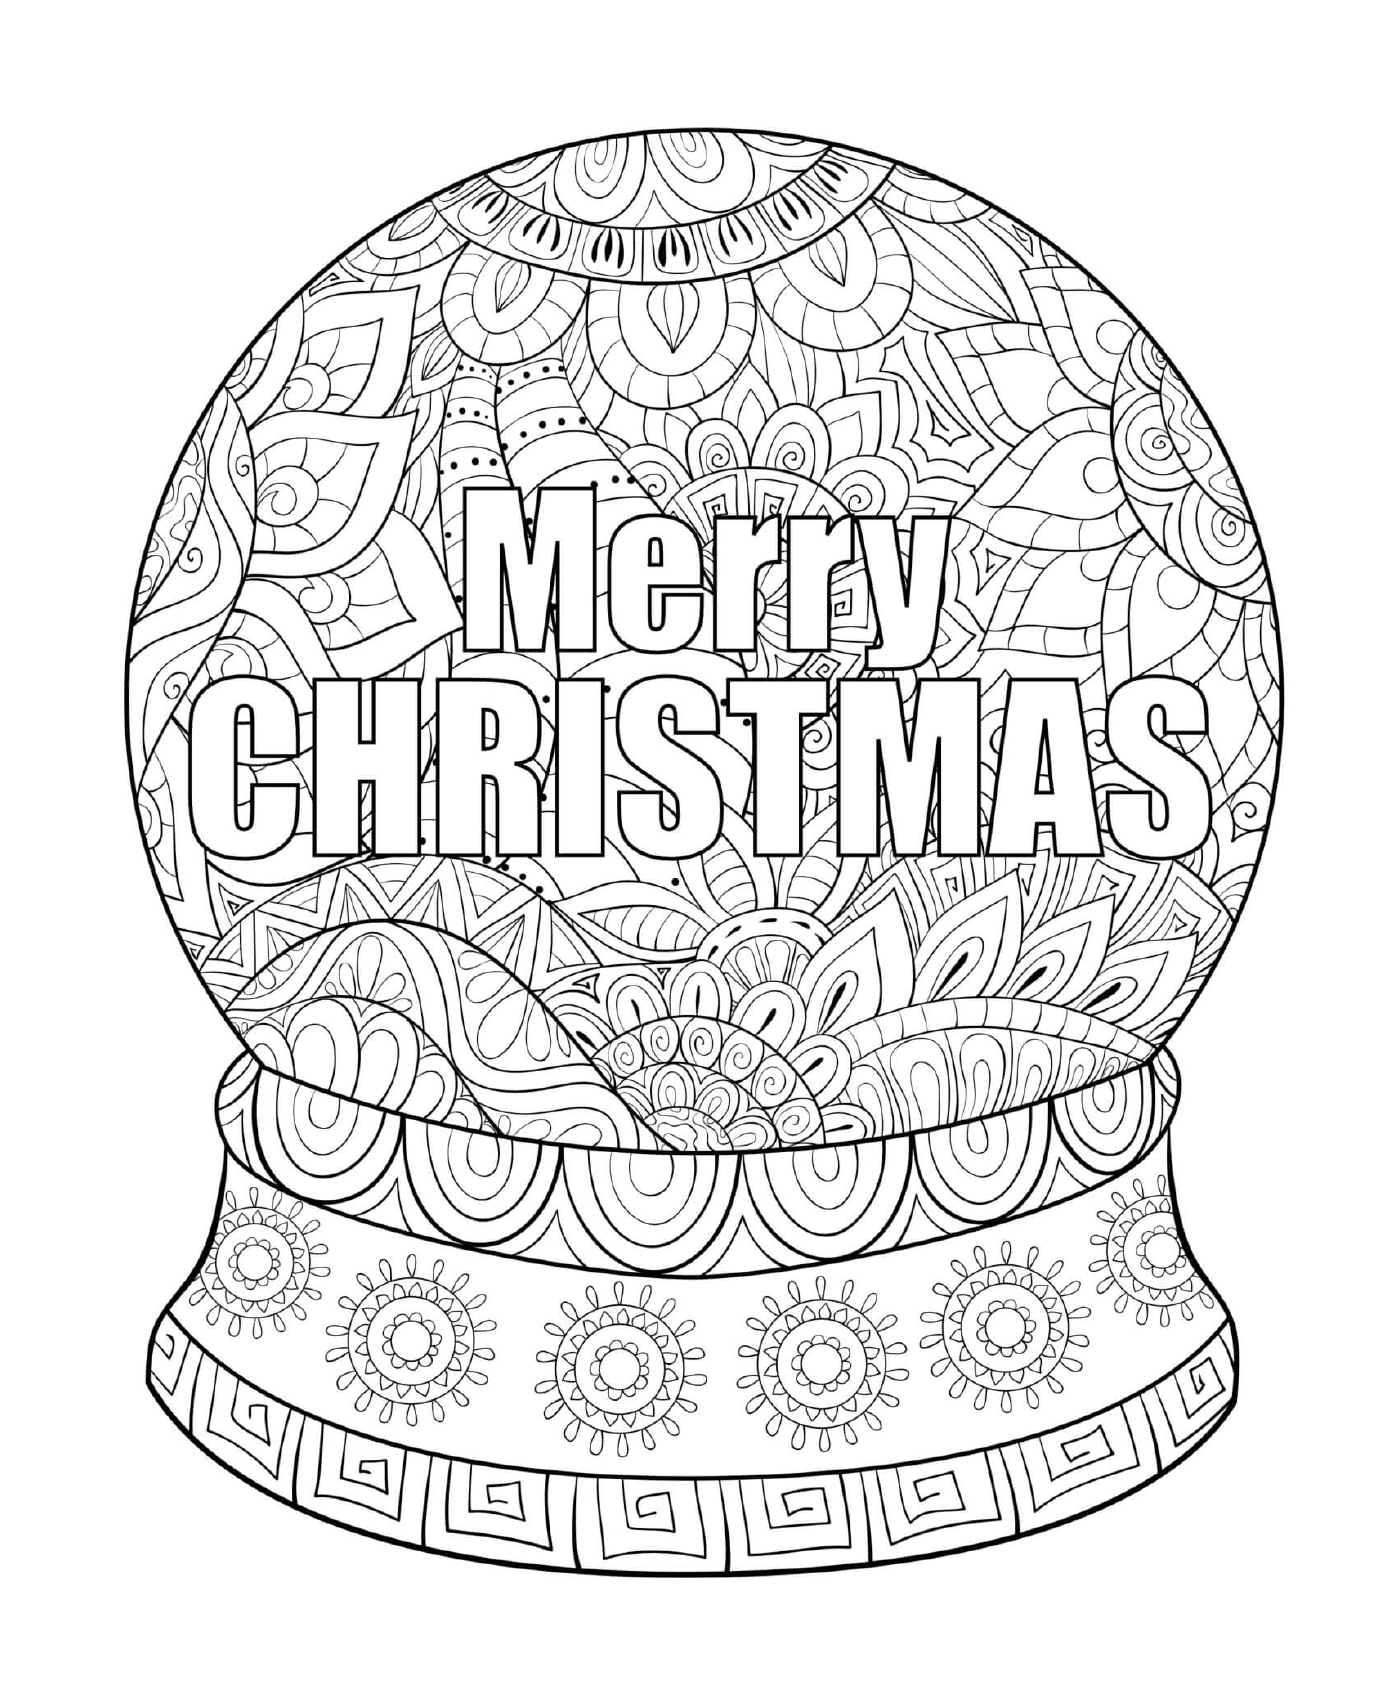  A Christmas ball with a snowman 